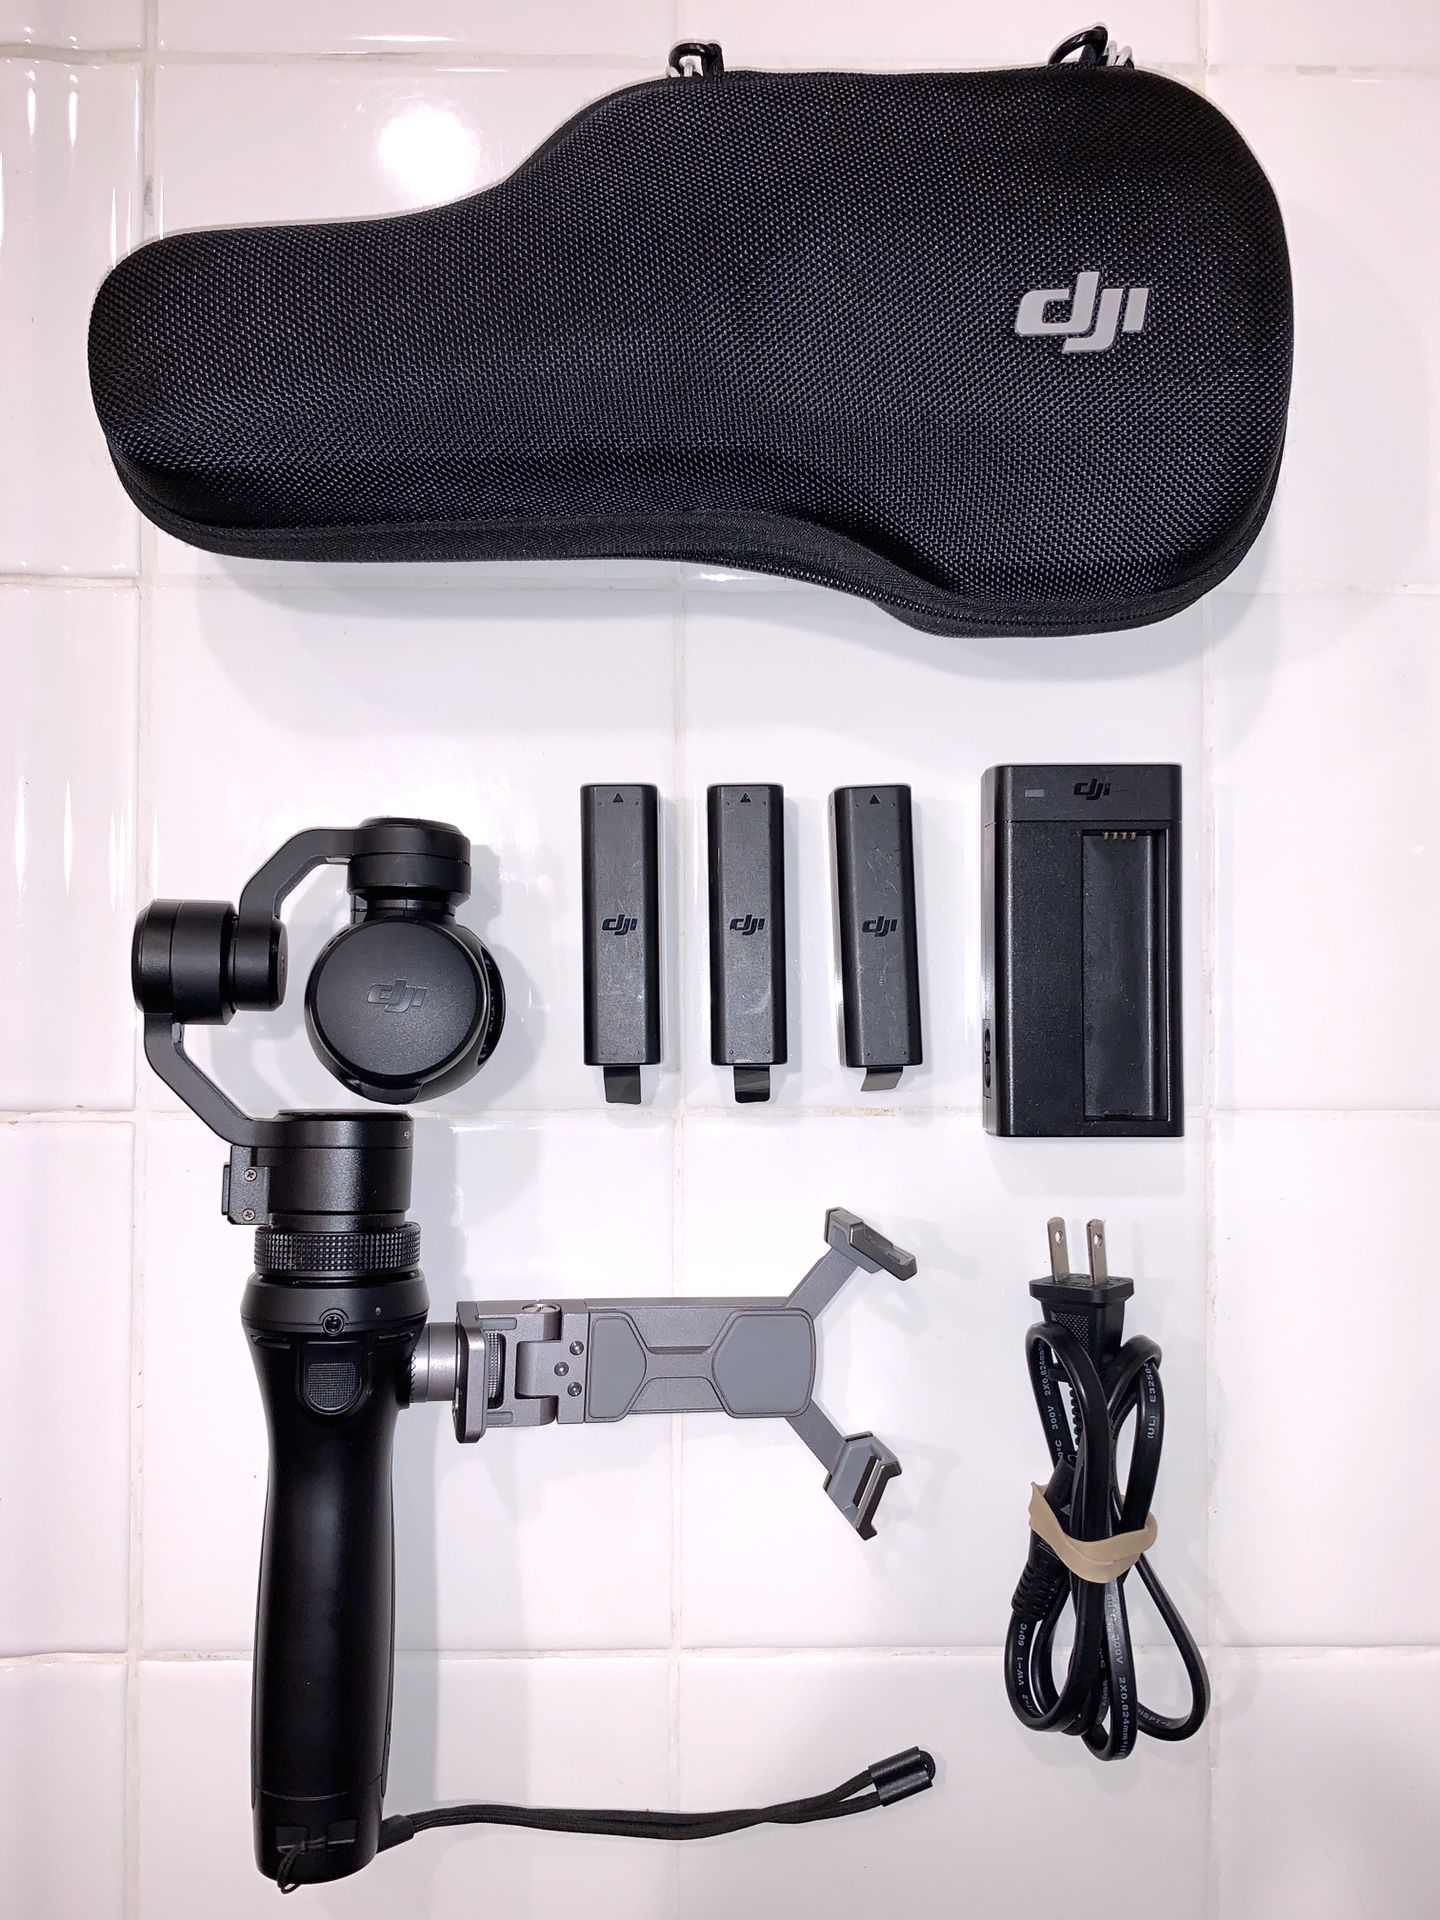 DJI Osmo Handheld 4K Camera and 3-Axis Gimbal Zenmuse X3